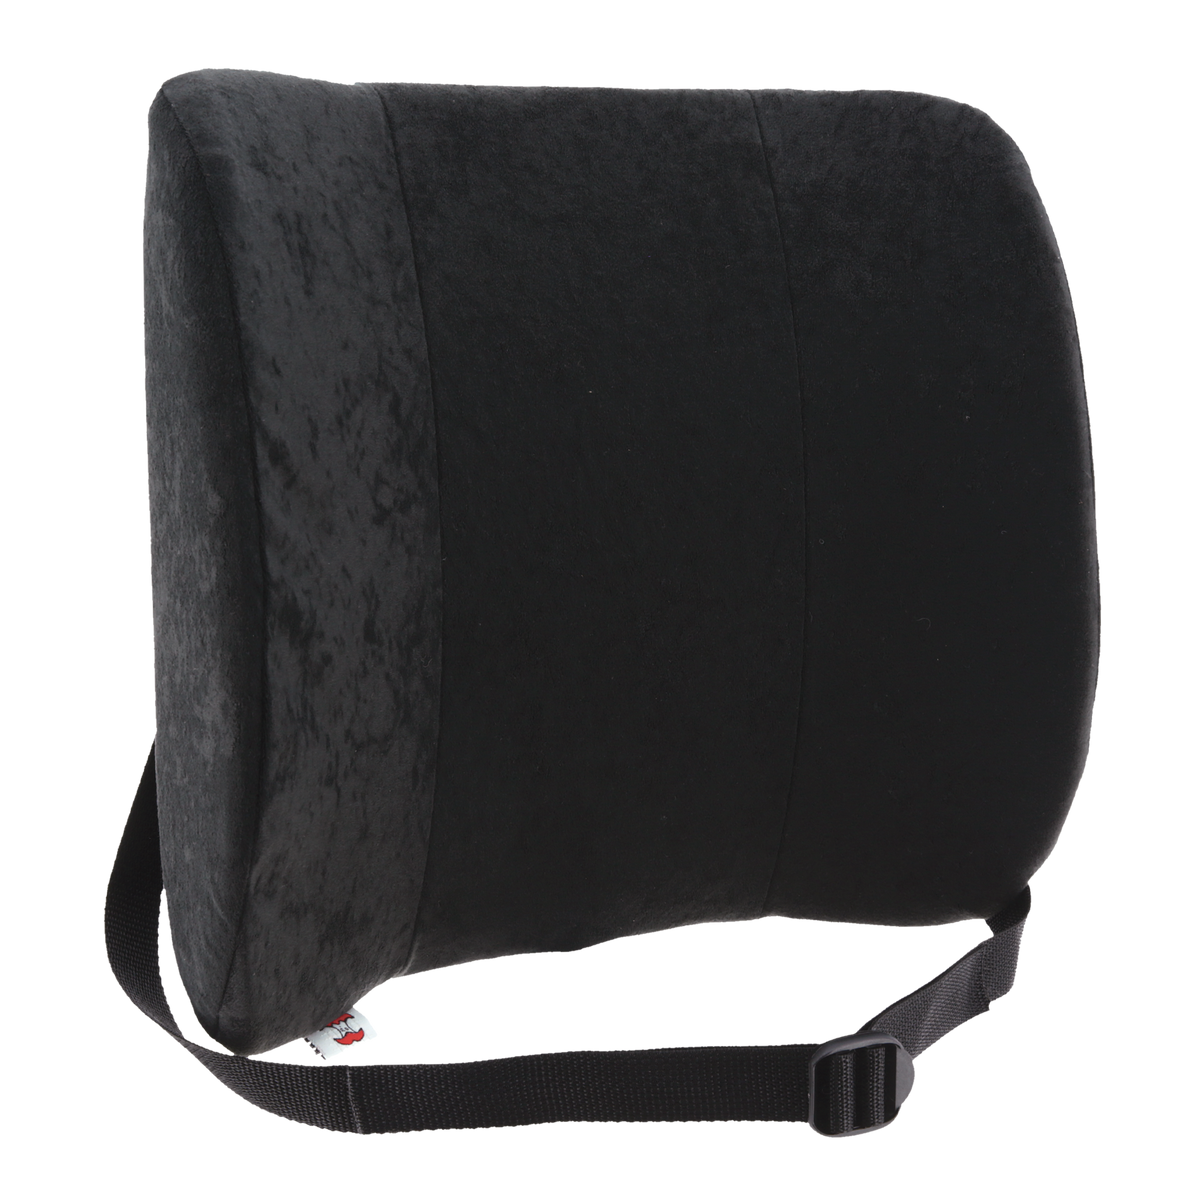 Core Automotive Deluxe Lumbar Support Bucket Seat